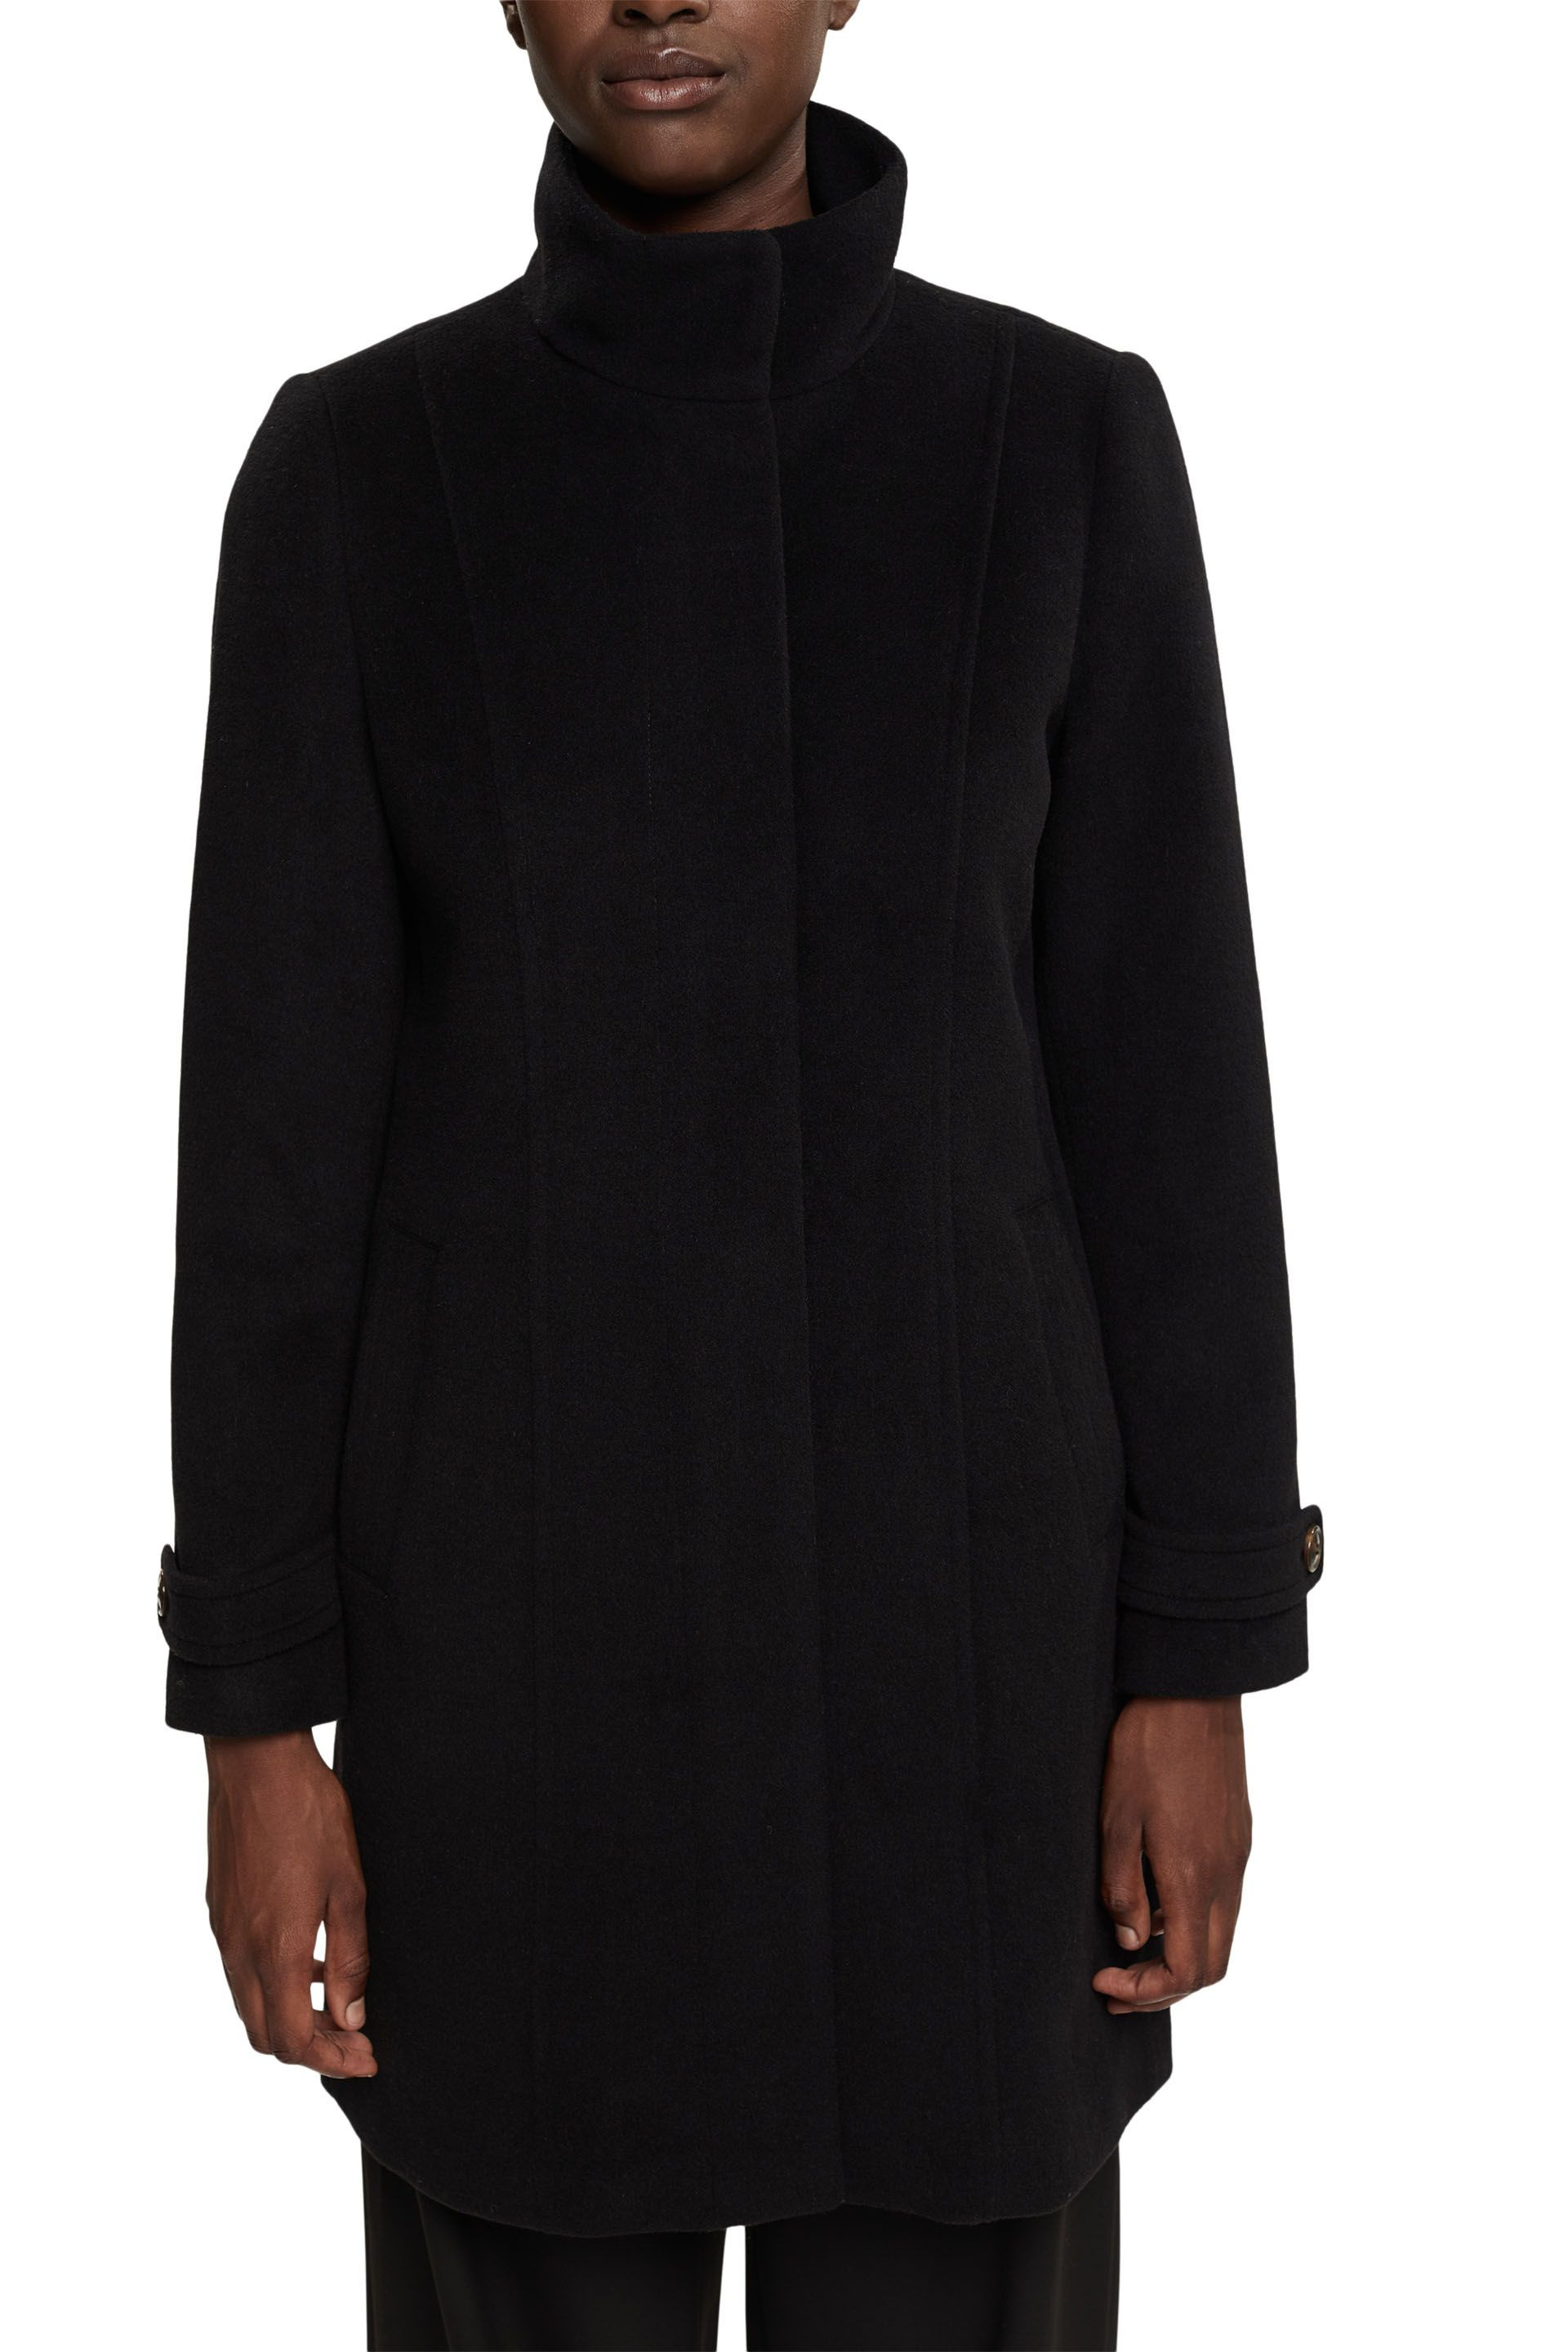 Collared coat, Black, large image number 1